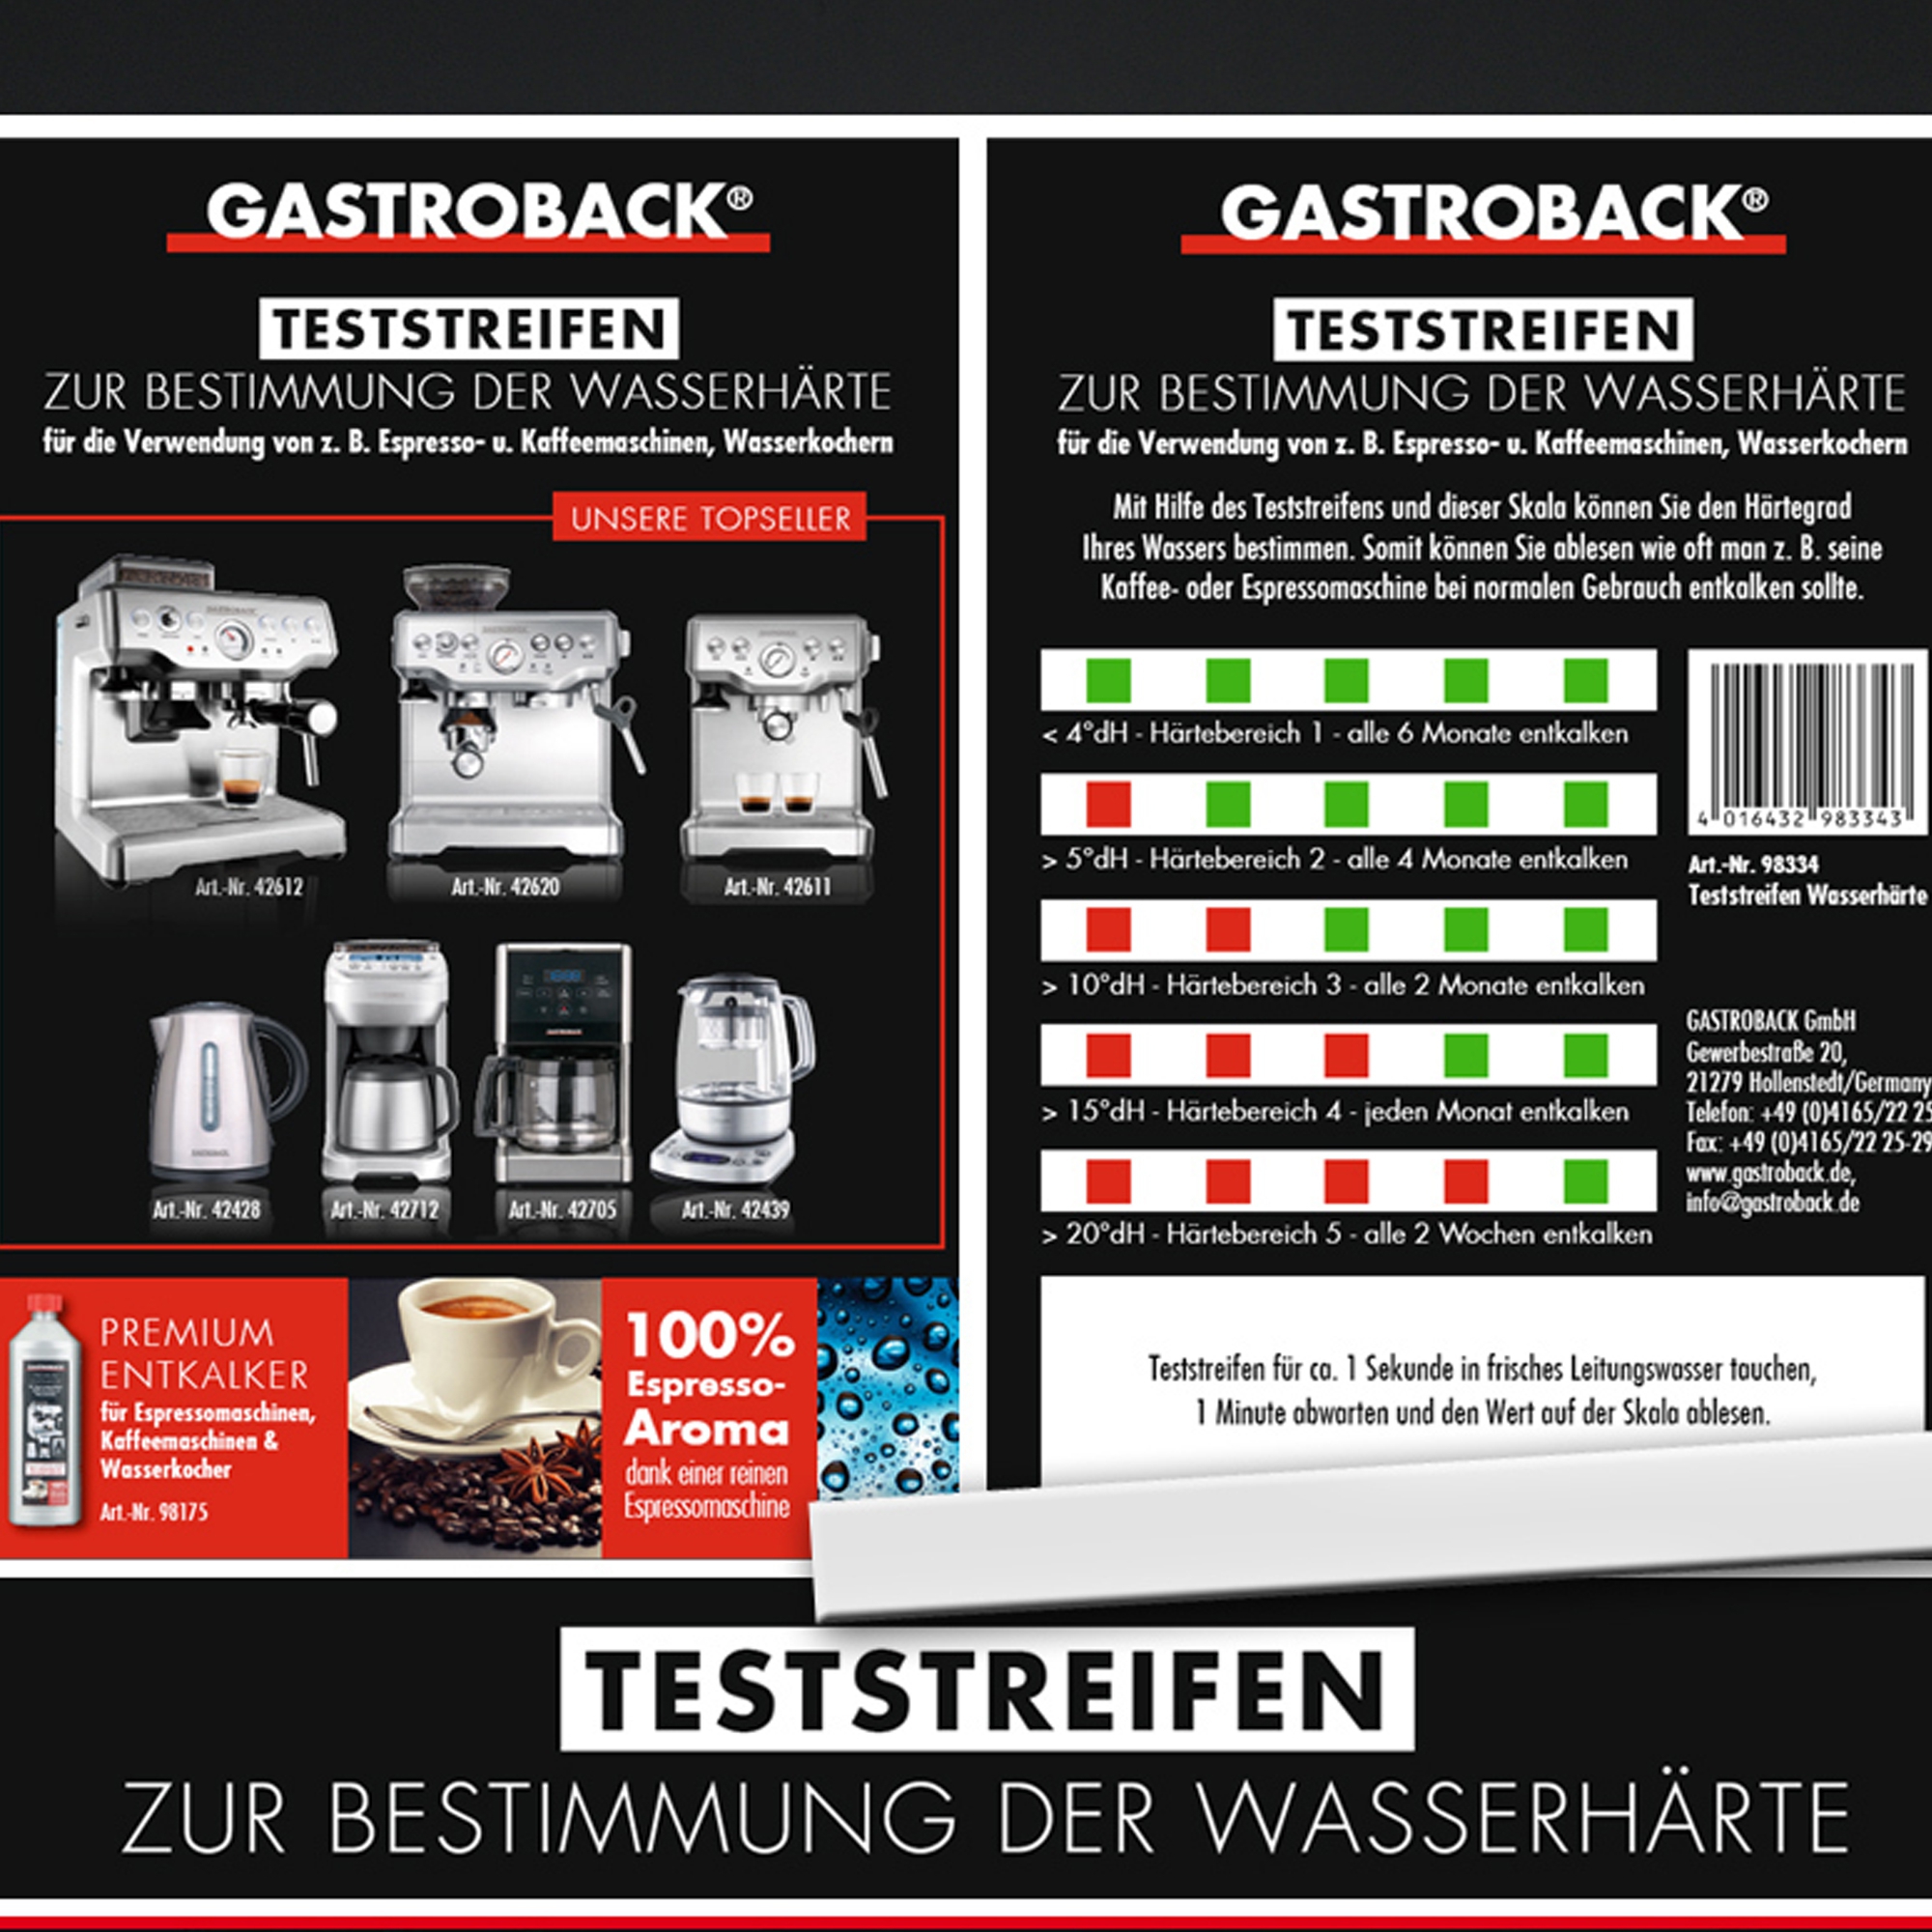 Gastroback - Test strip for water hardness